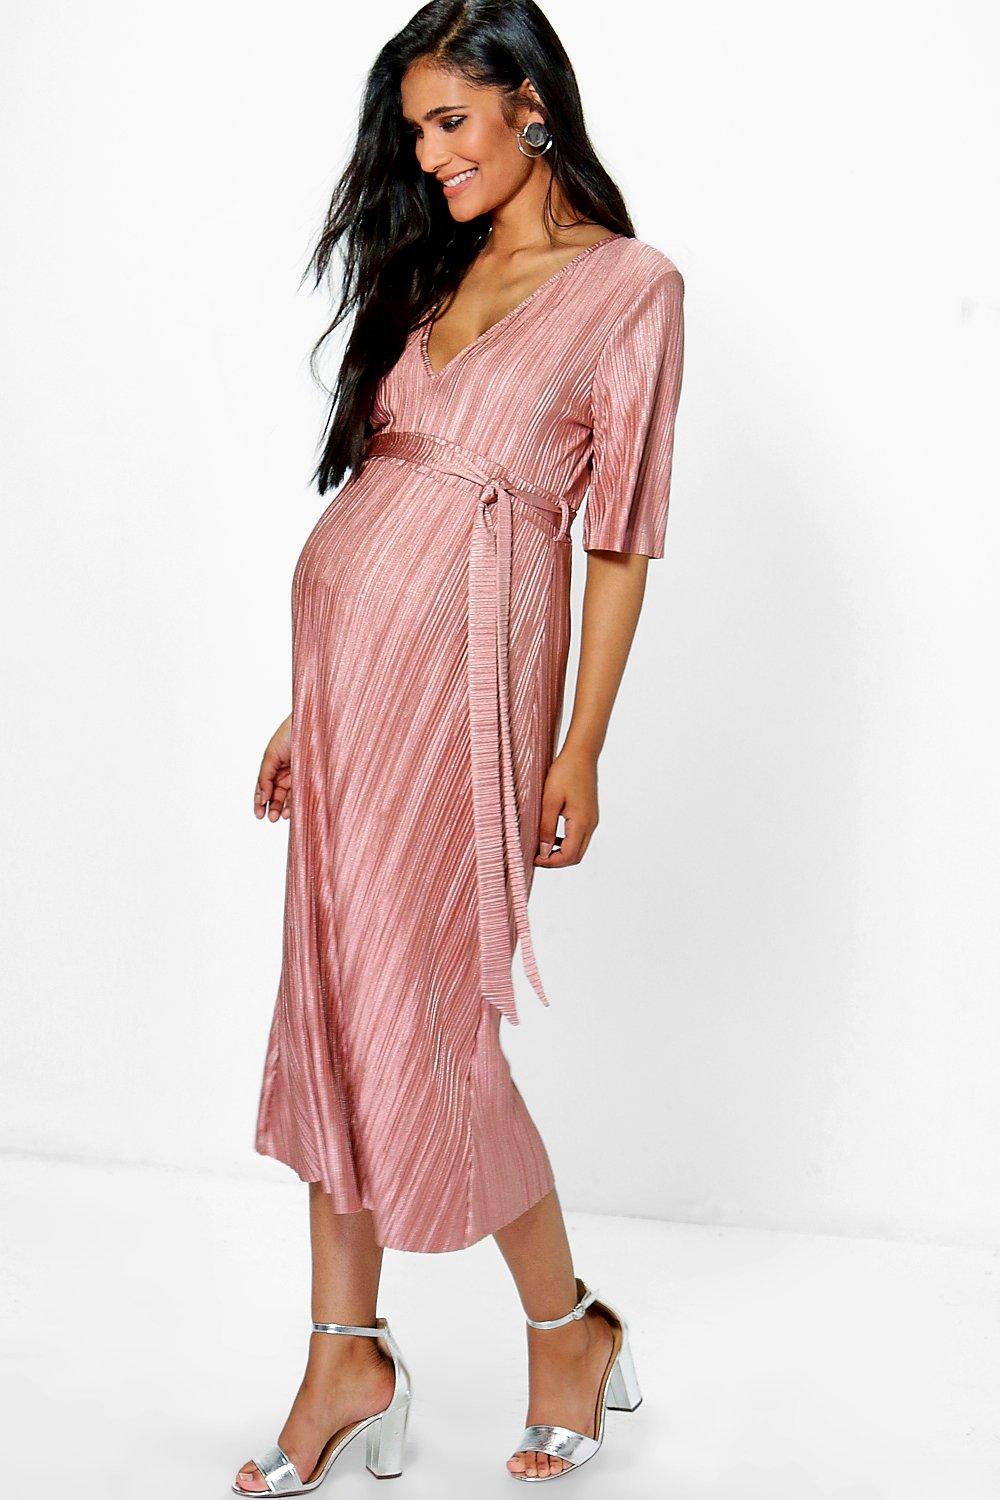 boohoo pink maternity dress